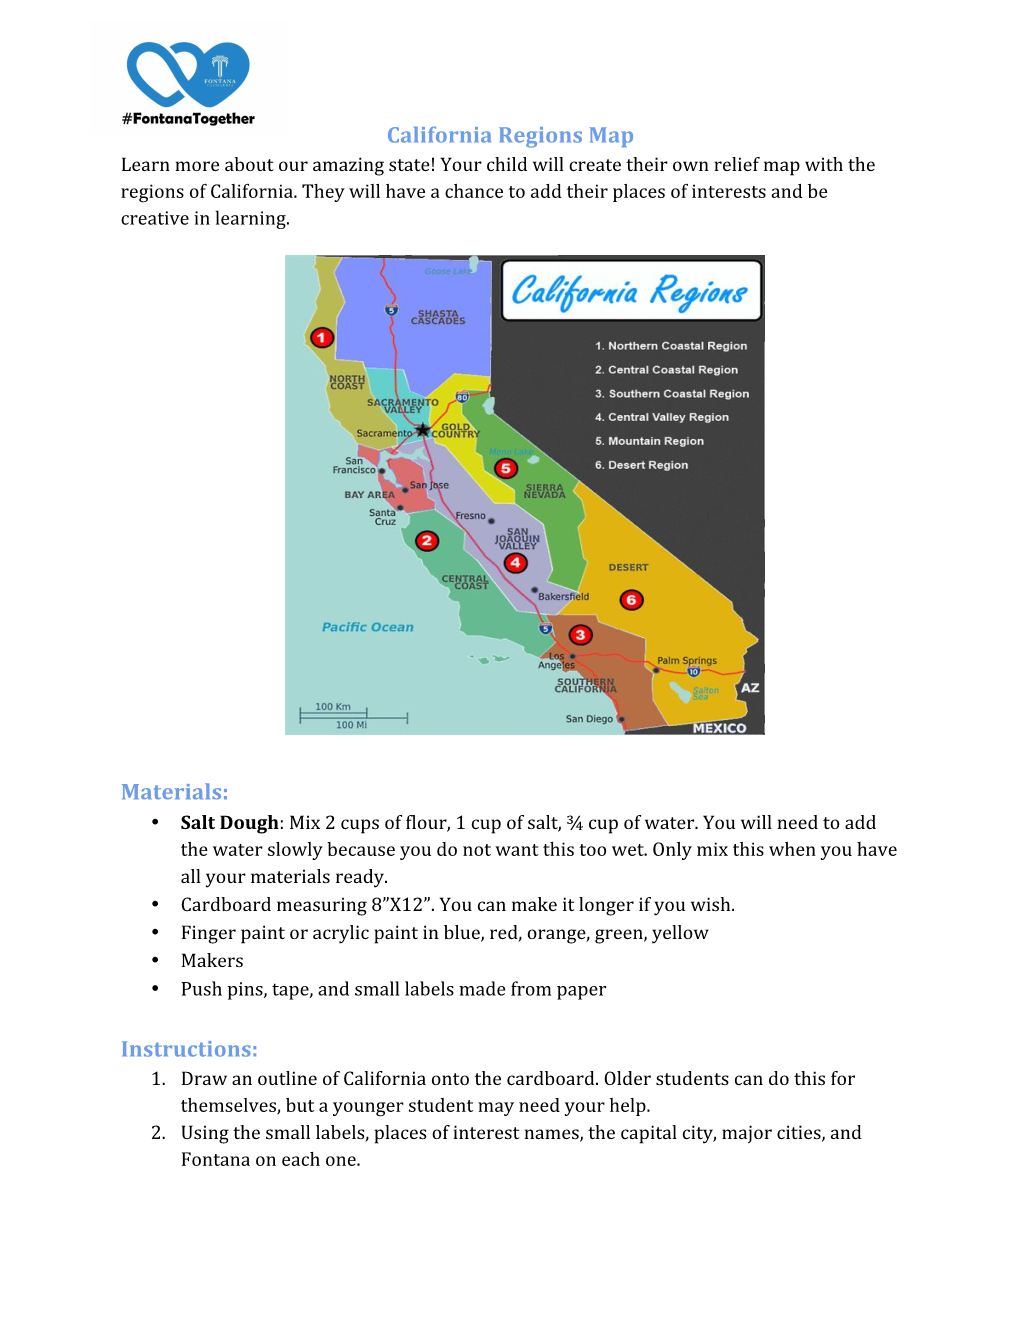 California Regions Map Materials: Instructions